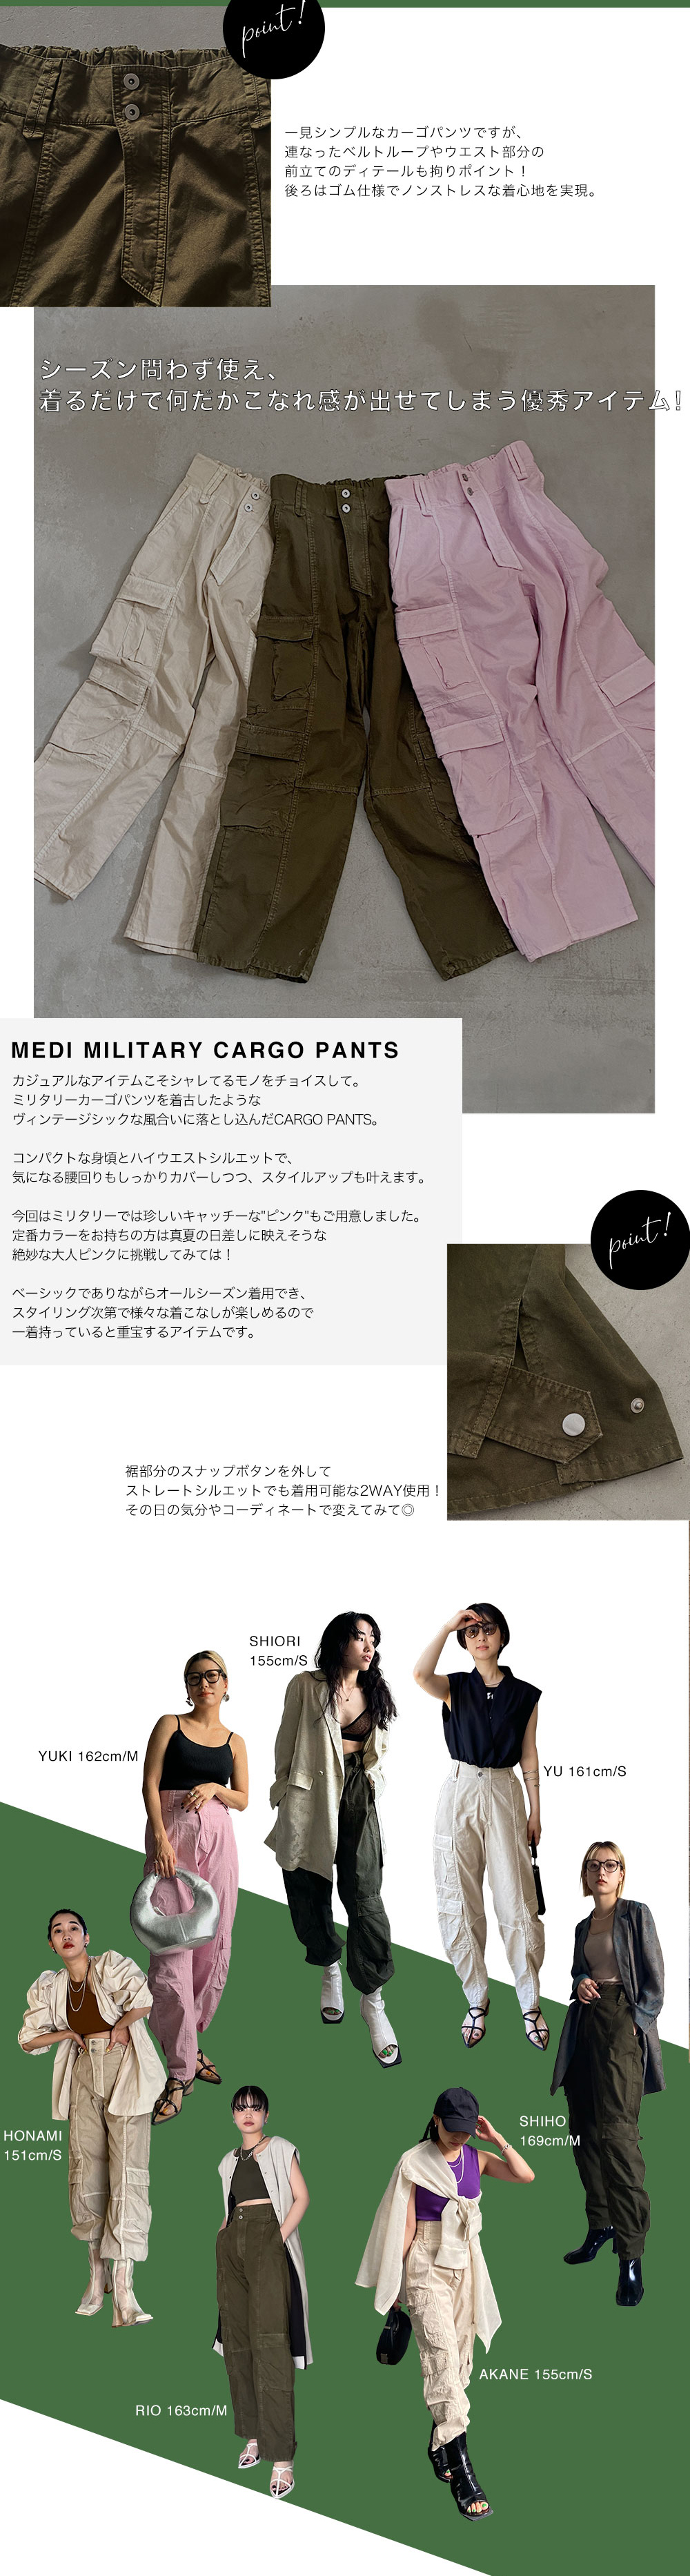 MEDI MILITARY CARGO PANTS - パンツ